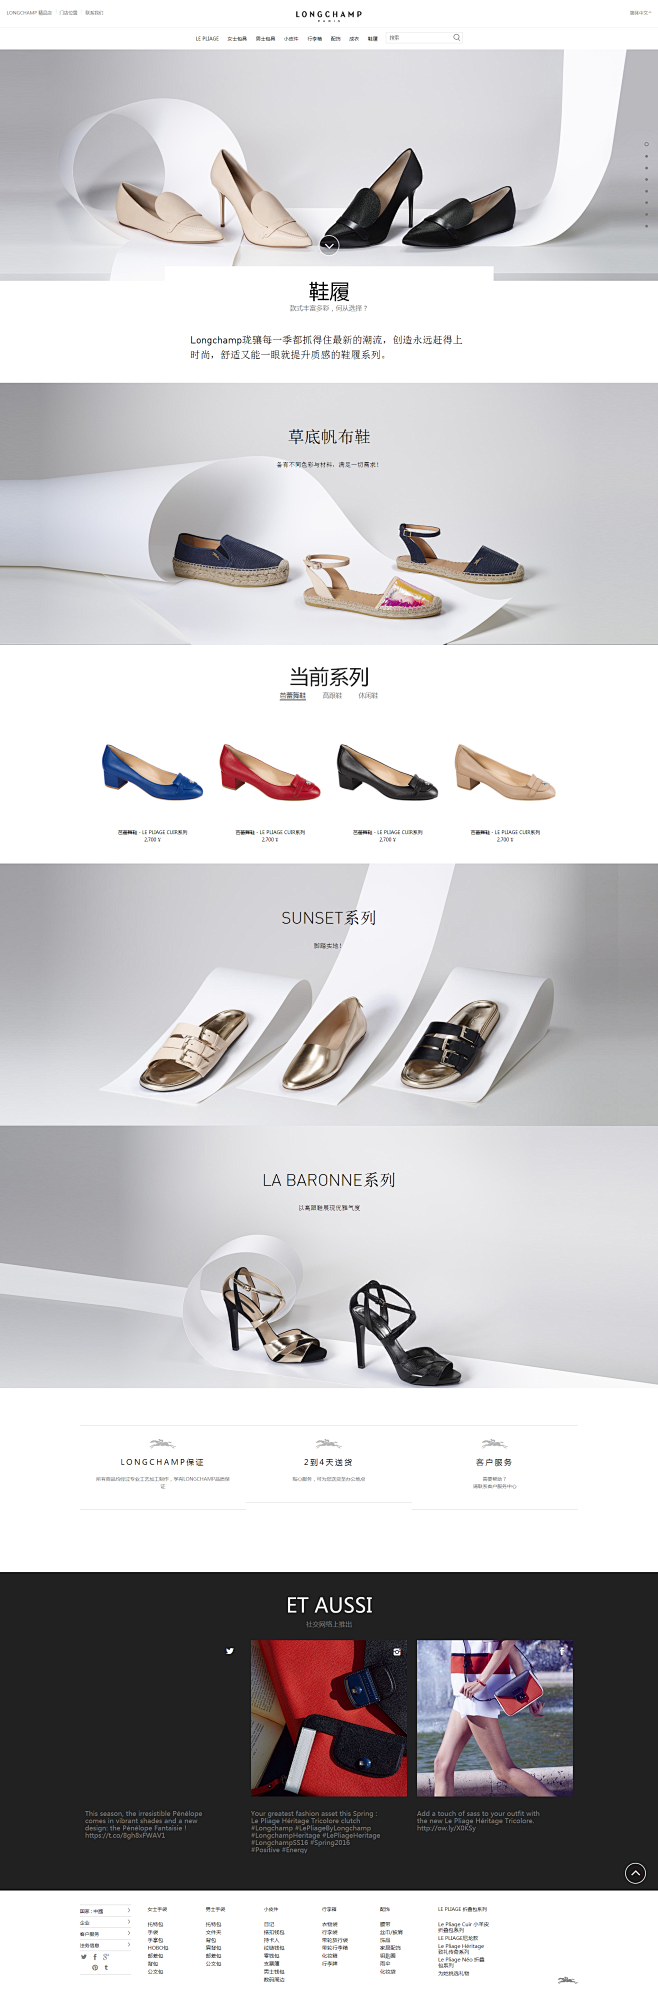 鞋履 | Longchamp 中國